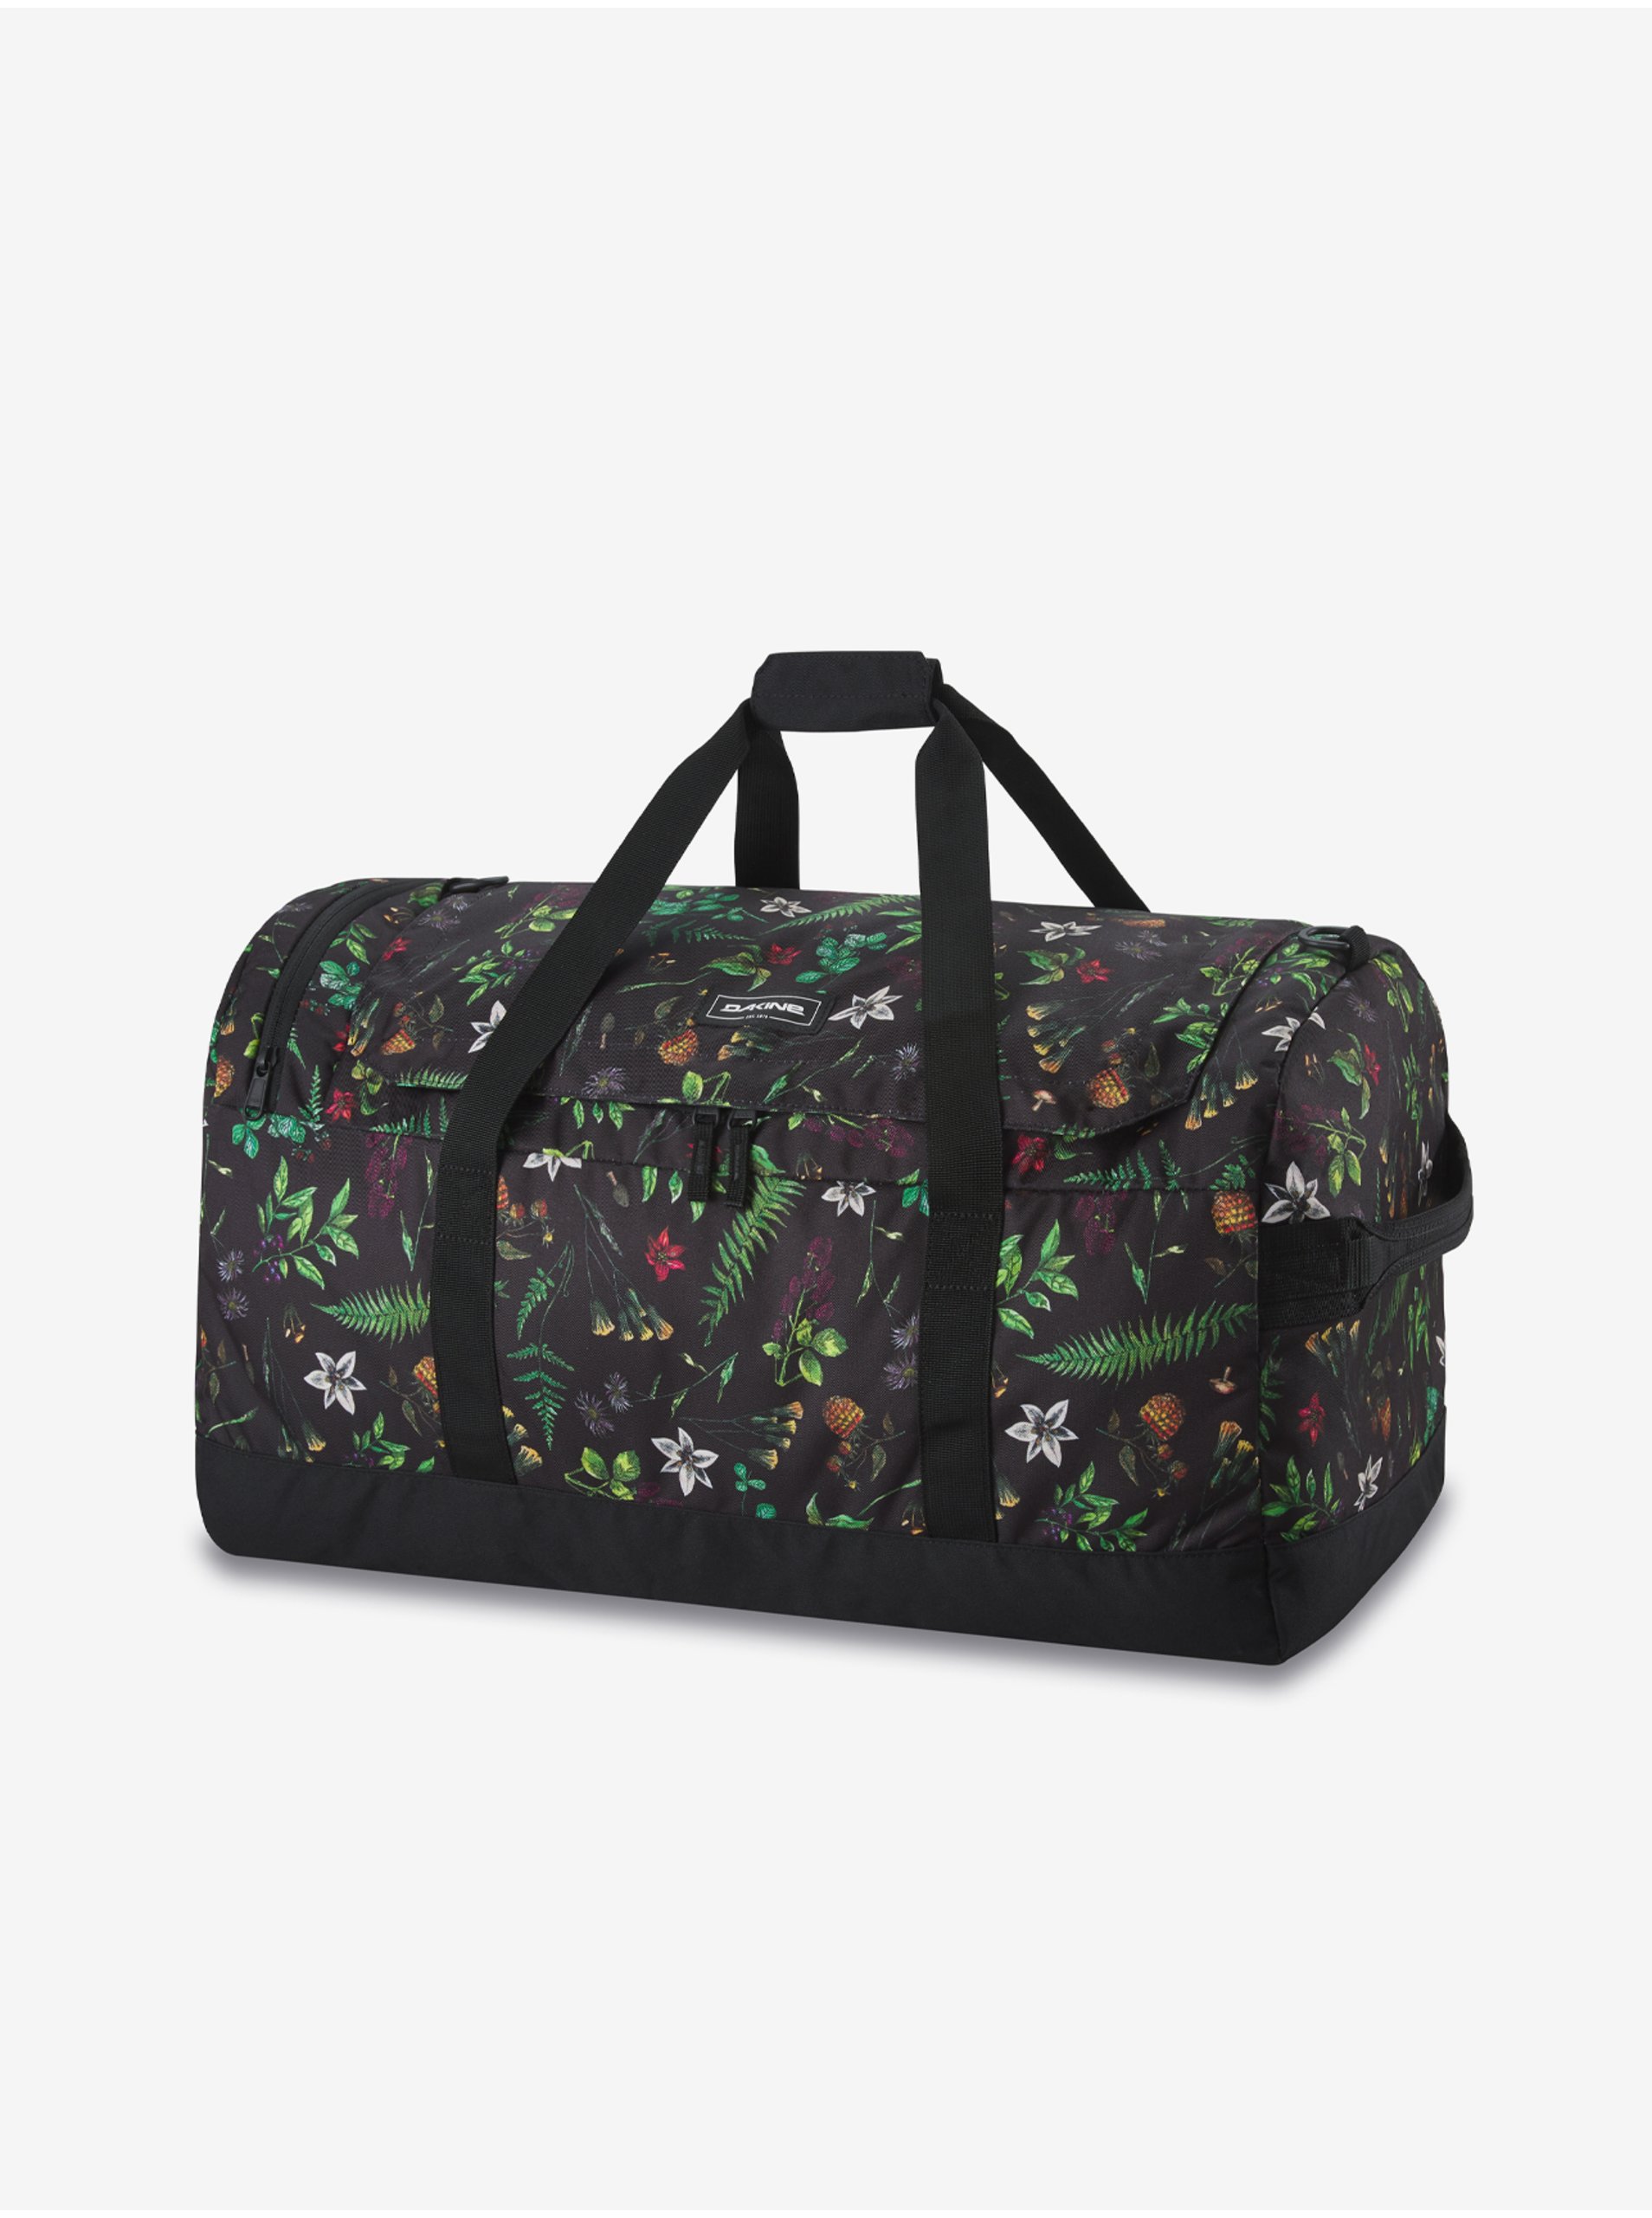 Doplnky Cestovné  tašky a kufre - Black Flowered Travel Bag Dakine Duffle - Women